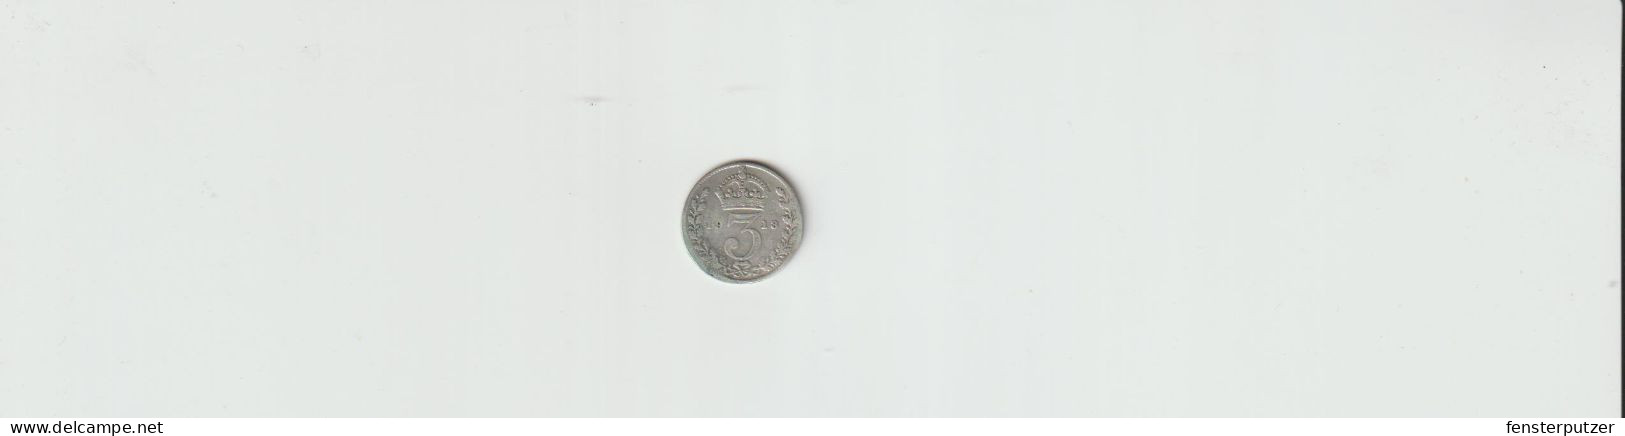 3 Pence Silber 1913 Durchmesser 16 Mm - 2 Gramm - Threepence